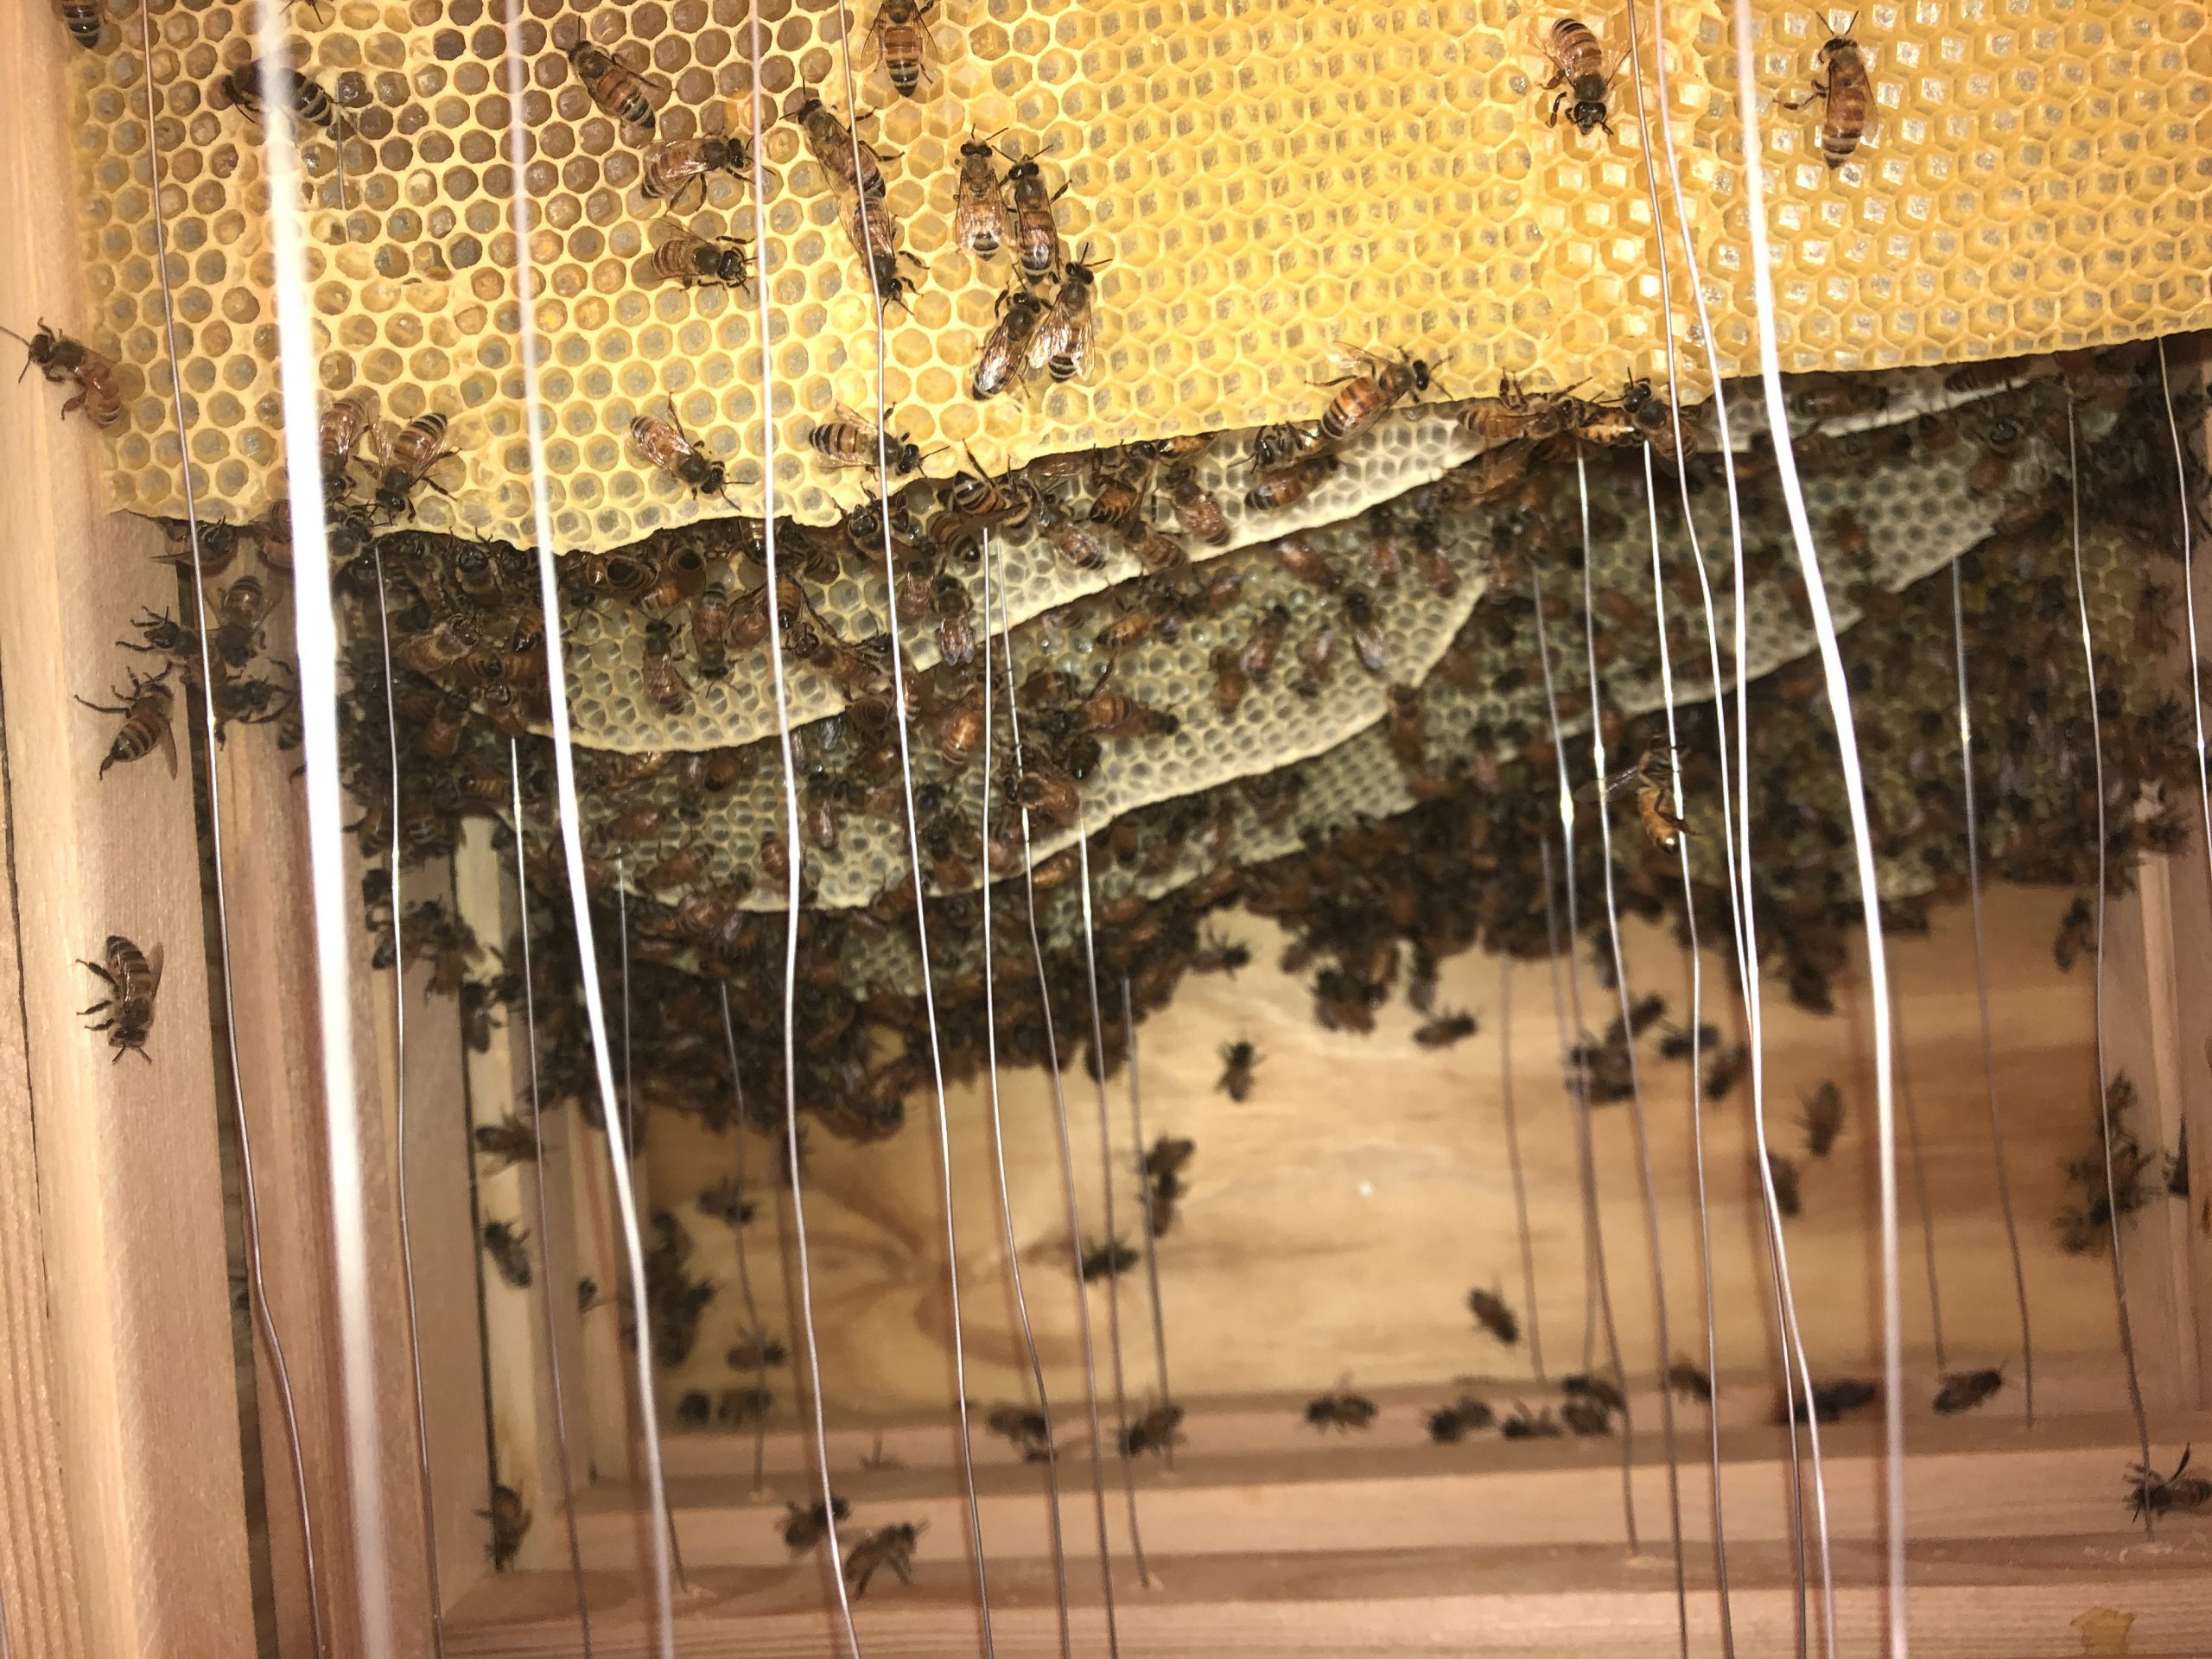 inside a bee hive